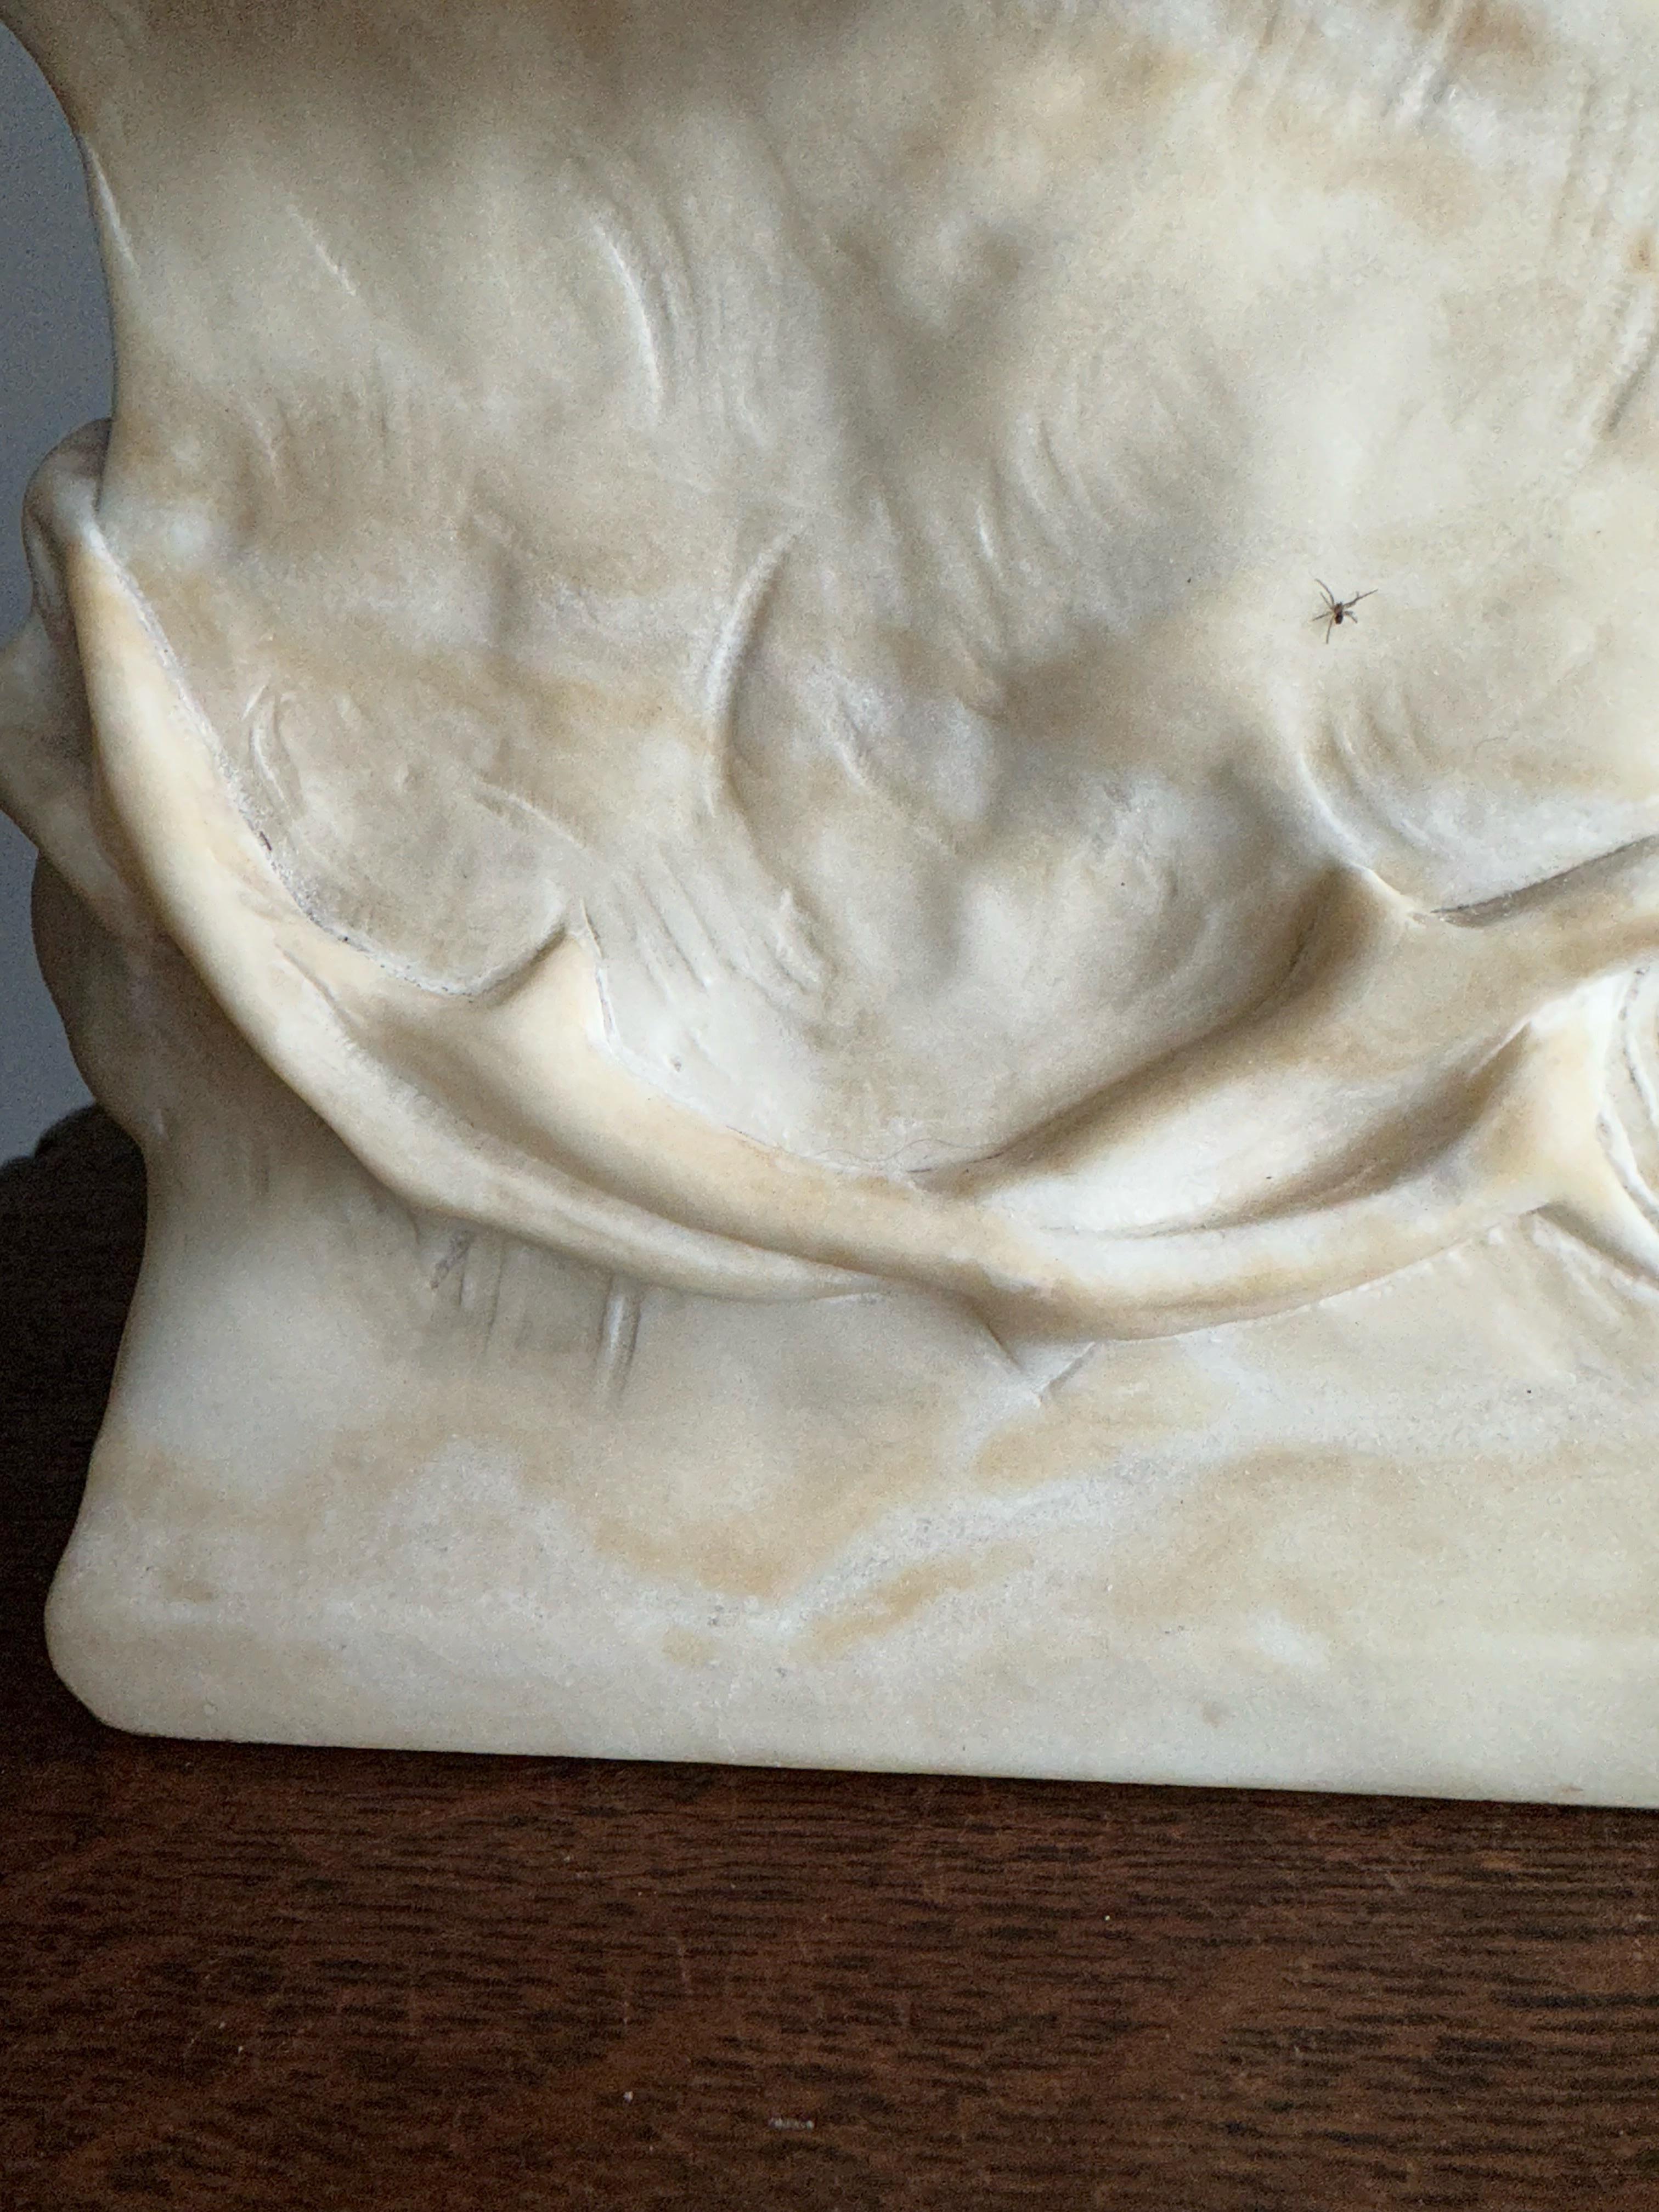 Antique, Early 1900 Large Hand Carved Alabaster Sculpture / Bust of Jesus Christ For Sale 11